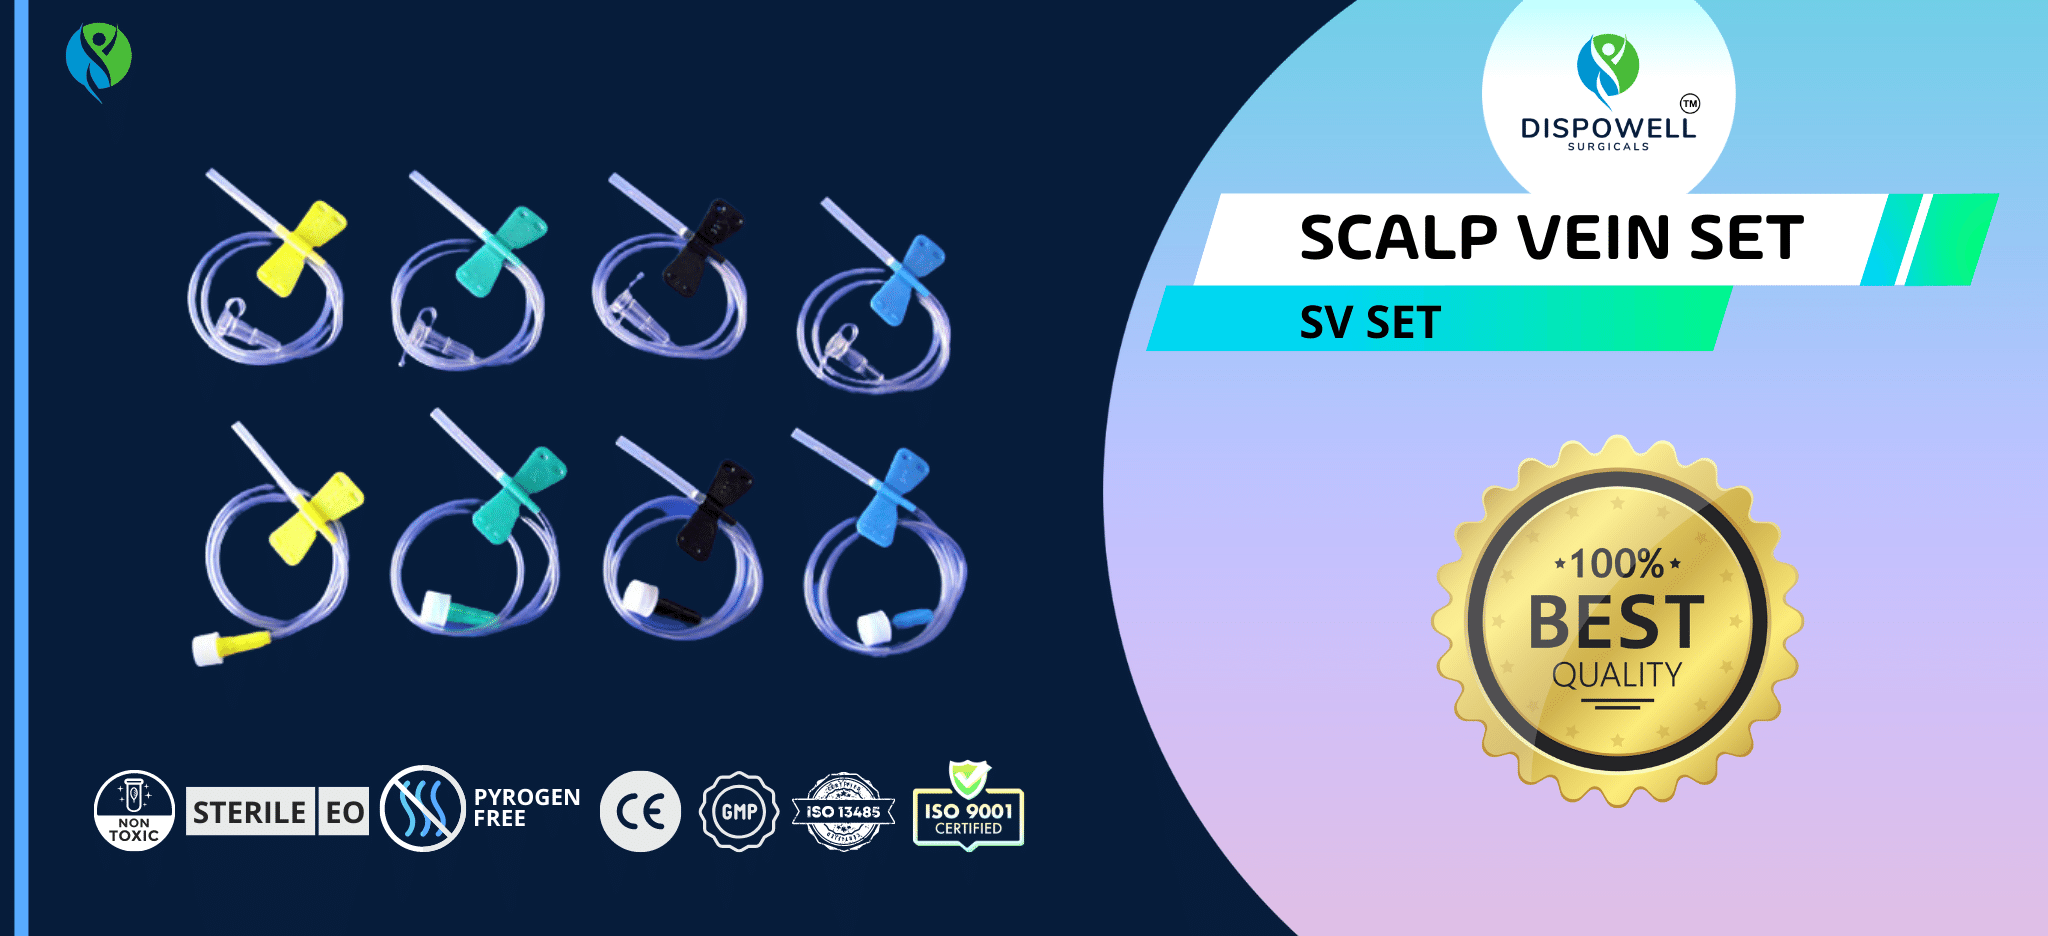 Scalp Vein Set, SV Set